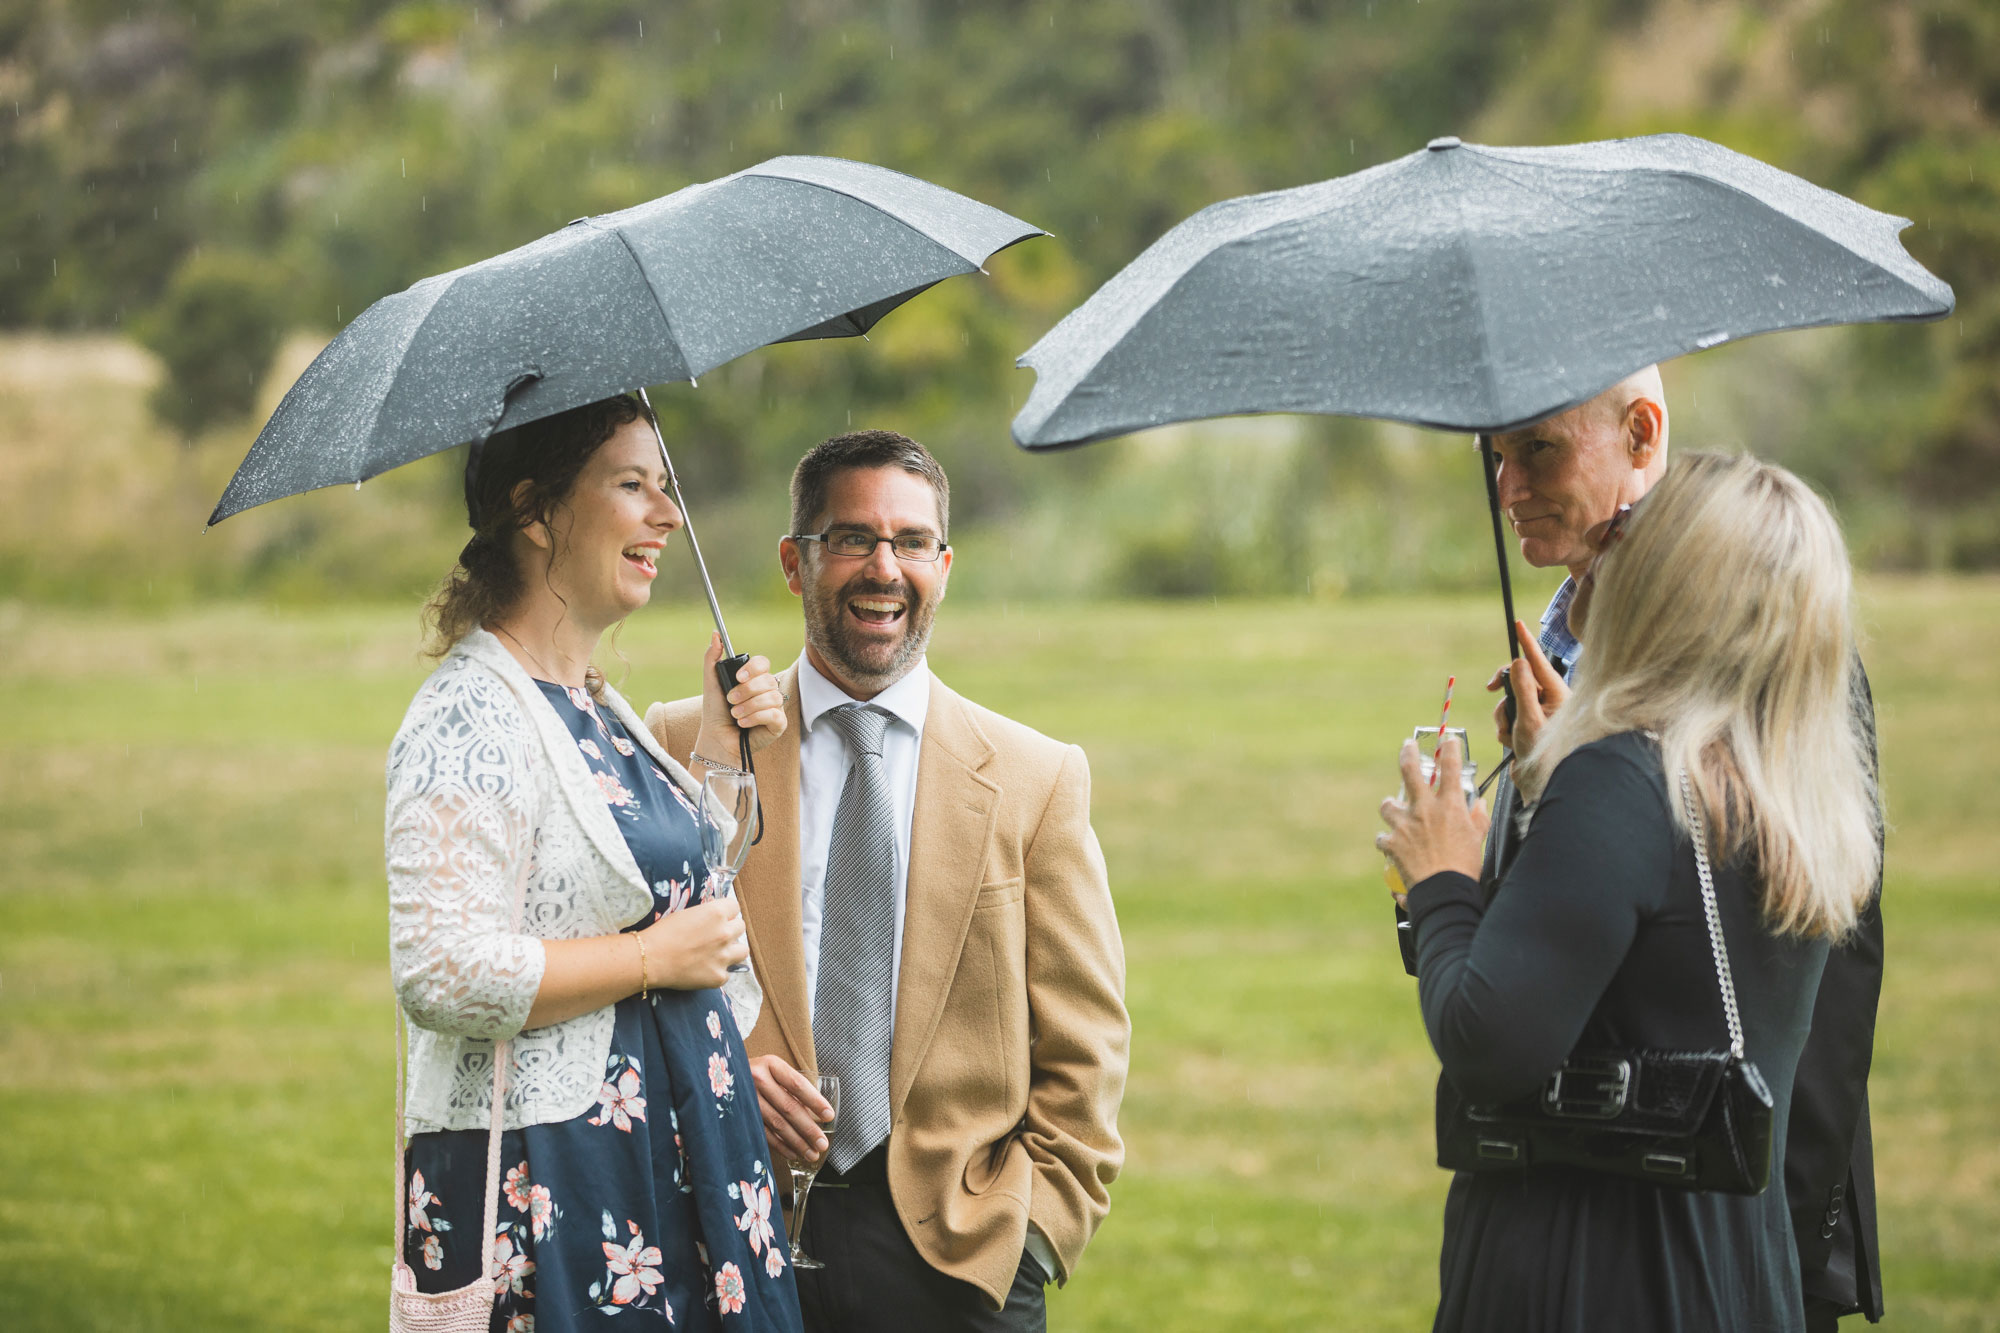 auckland waterfall farm wedding guests umbrella